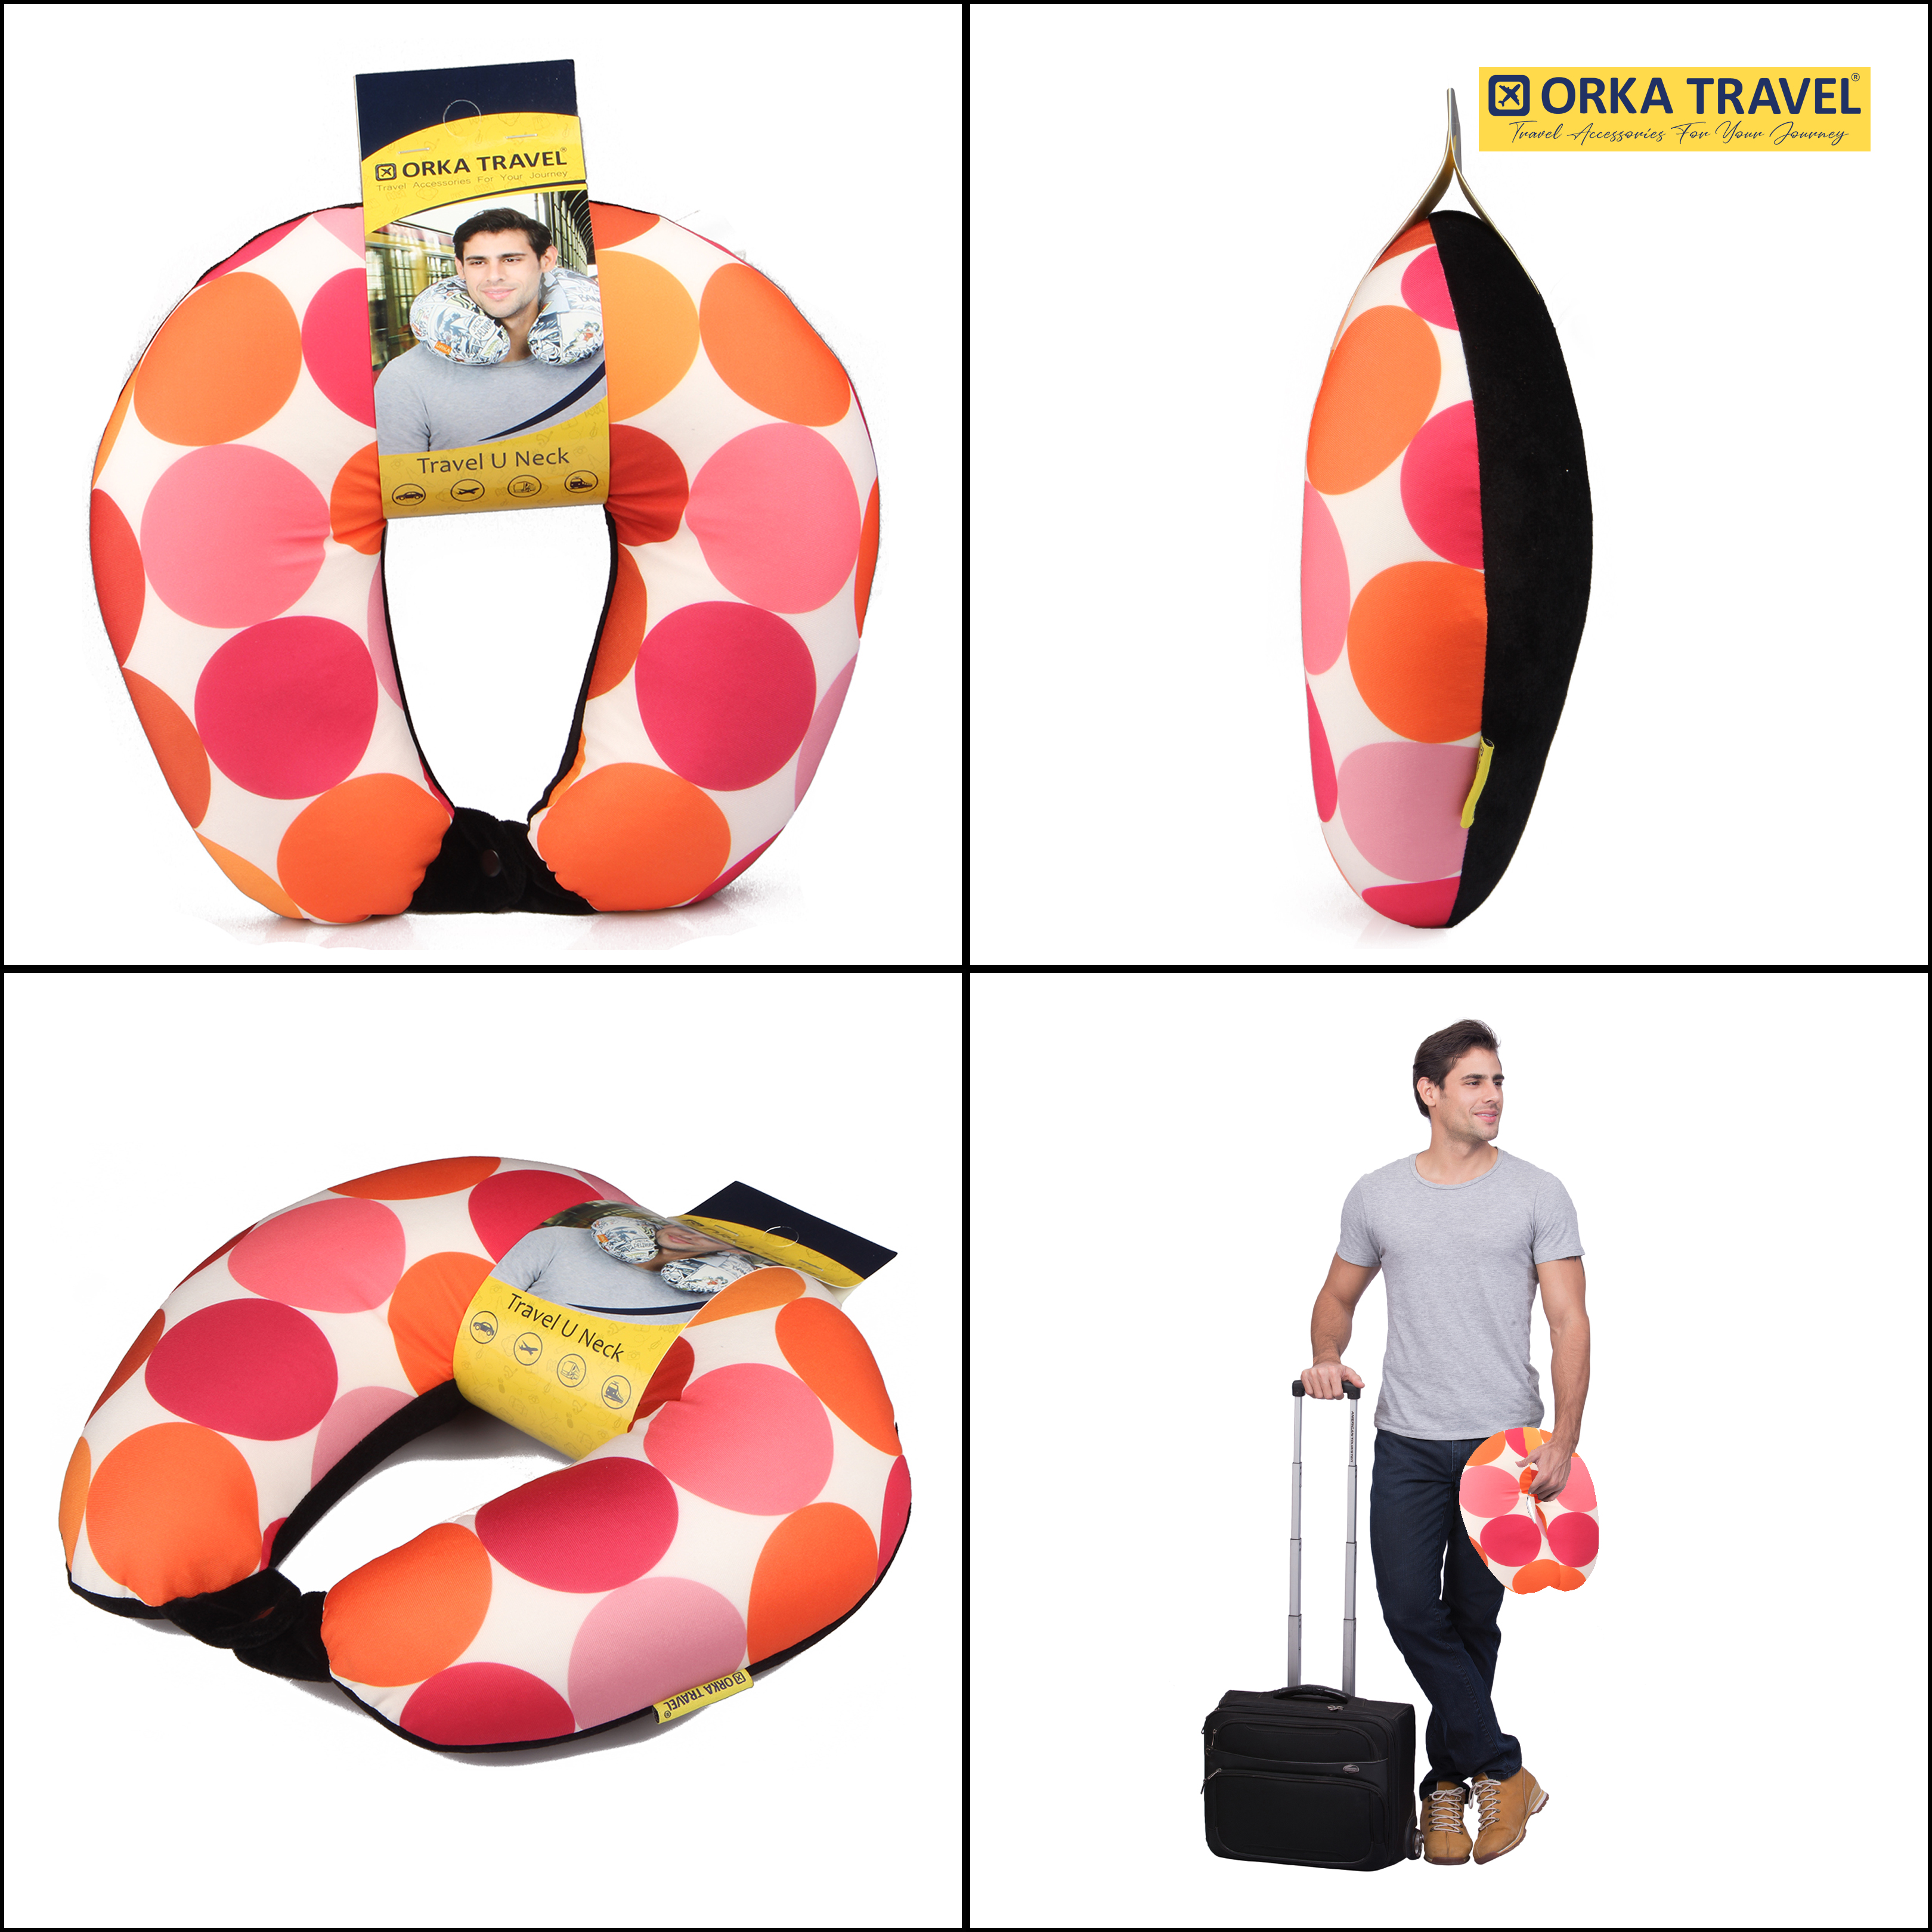 ORKA Travel Digital Printed Spandex With Micro Beads Travel U Neck Pillow Orange Dot  